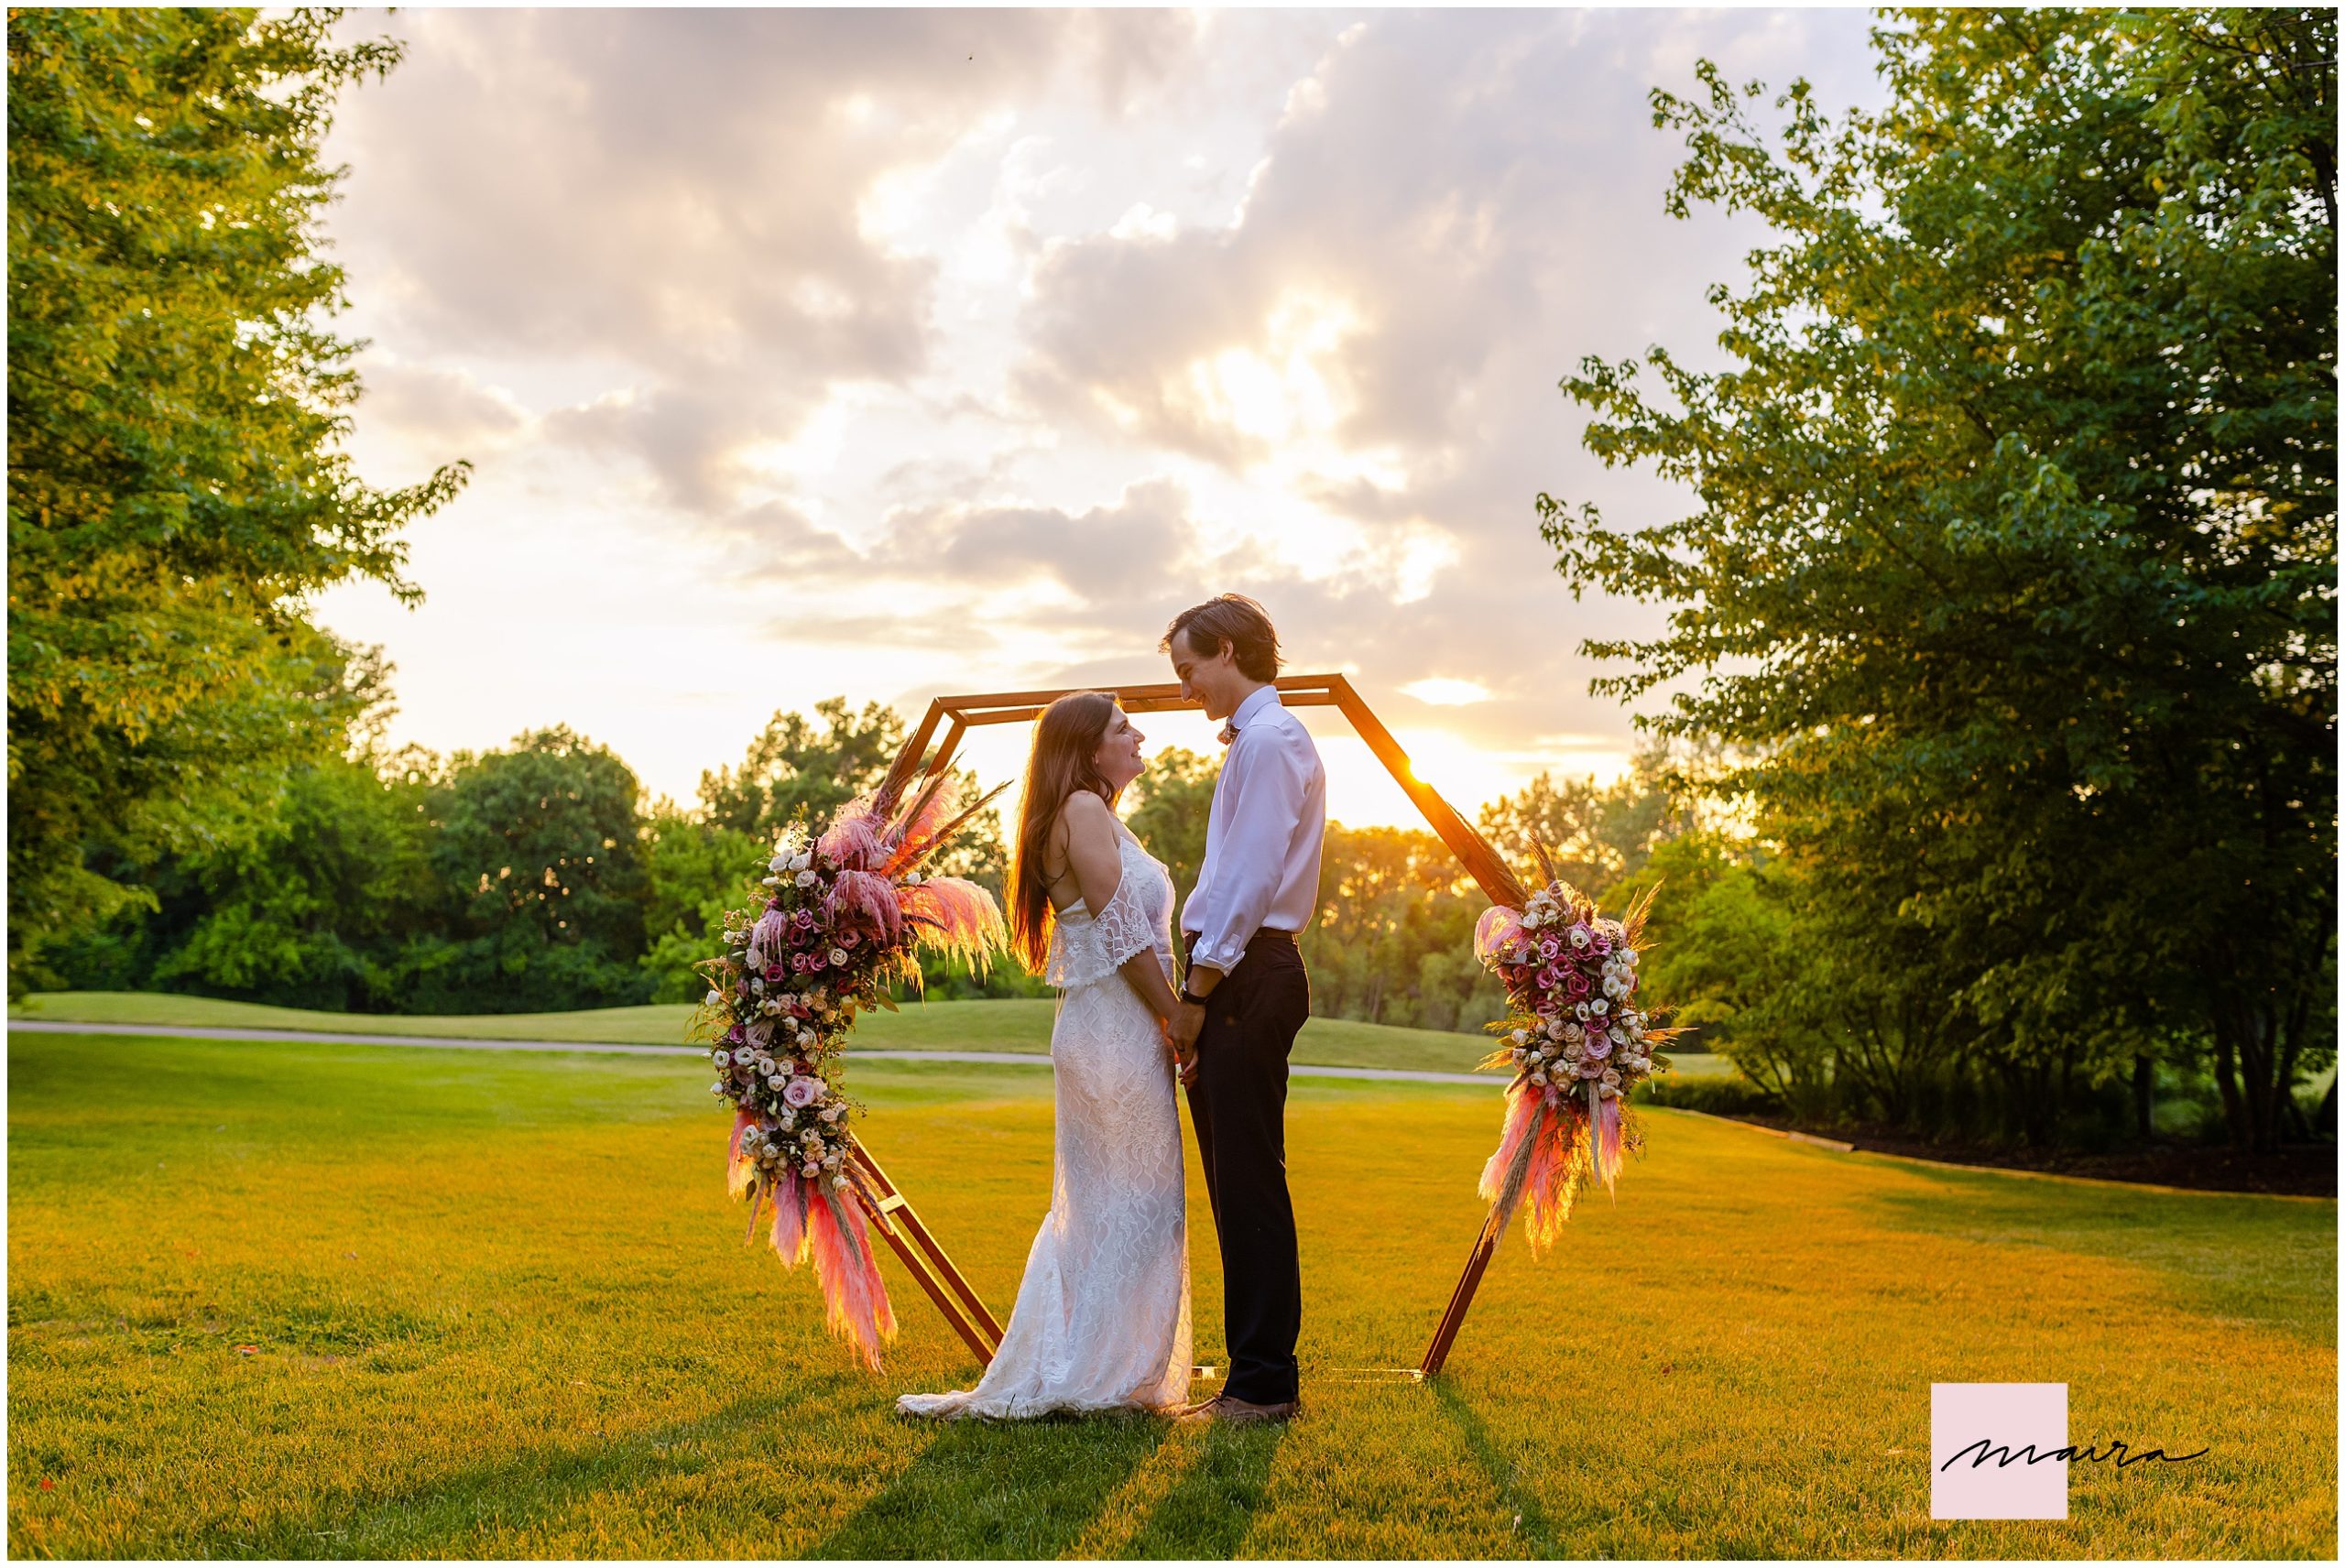 Sunset bride and groom hexagunal wooden arch backdrop wedding